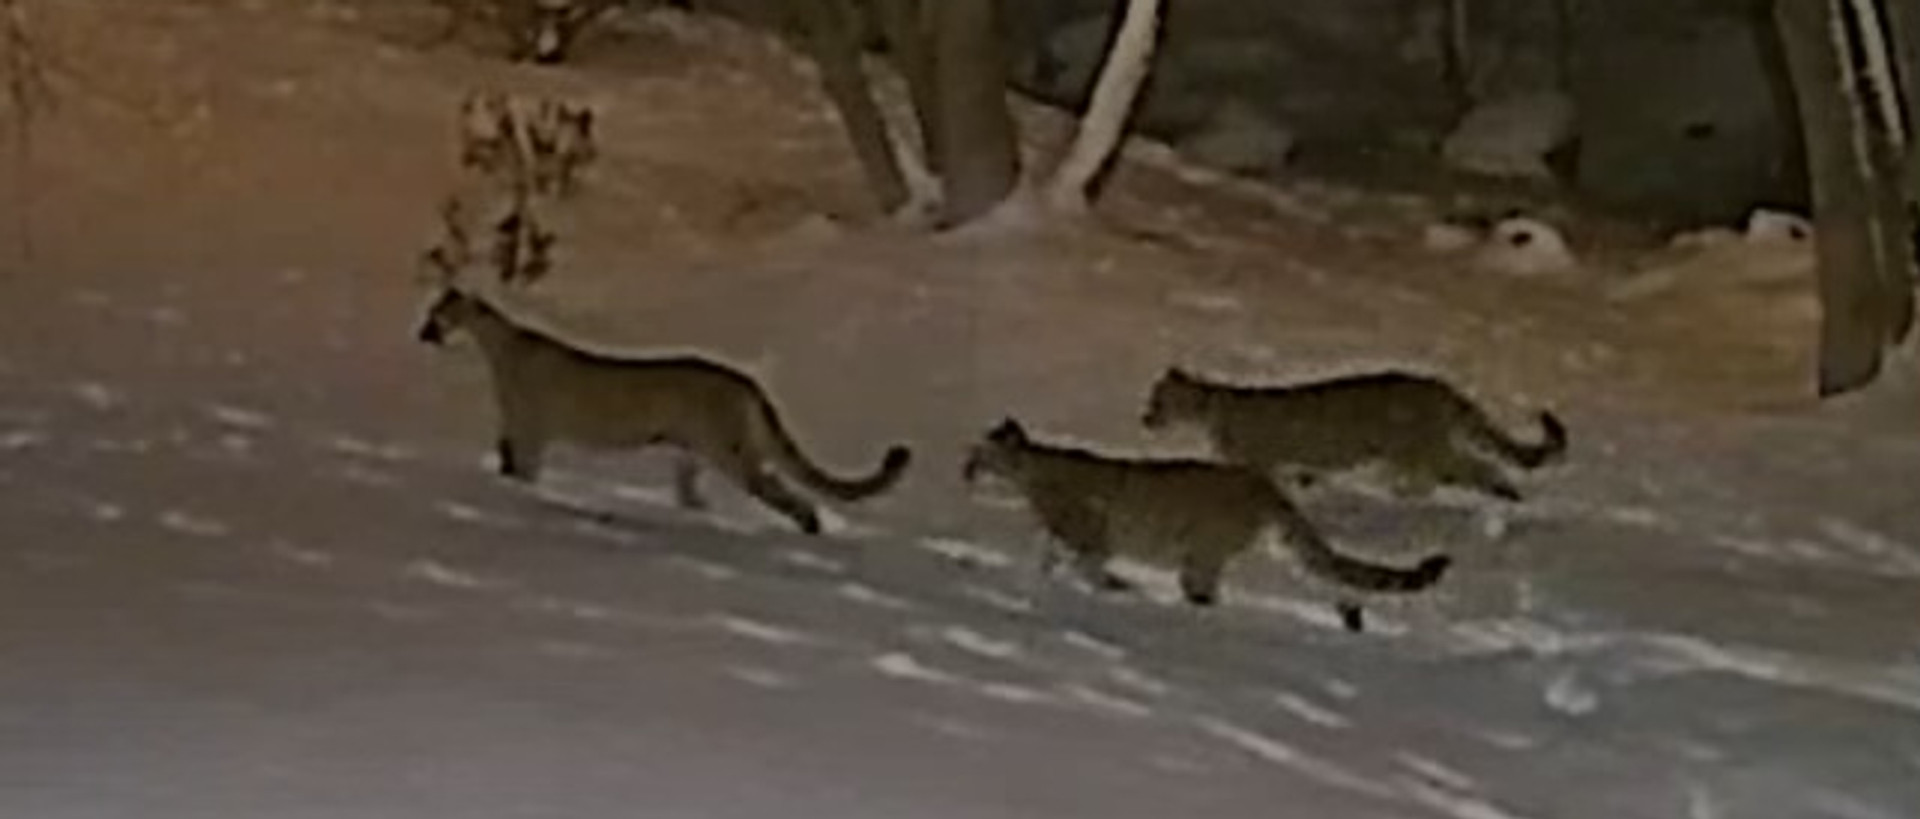 briody harrison share cougar hidden cam photos